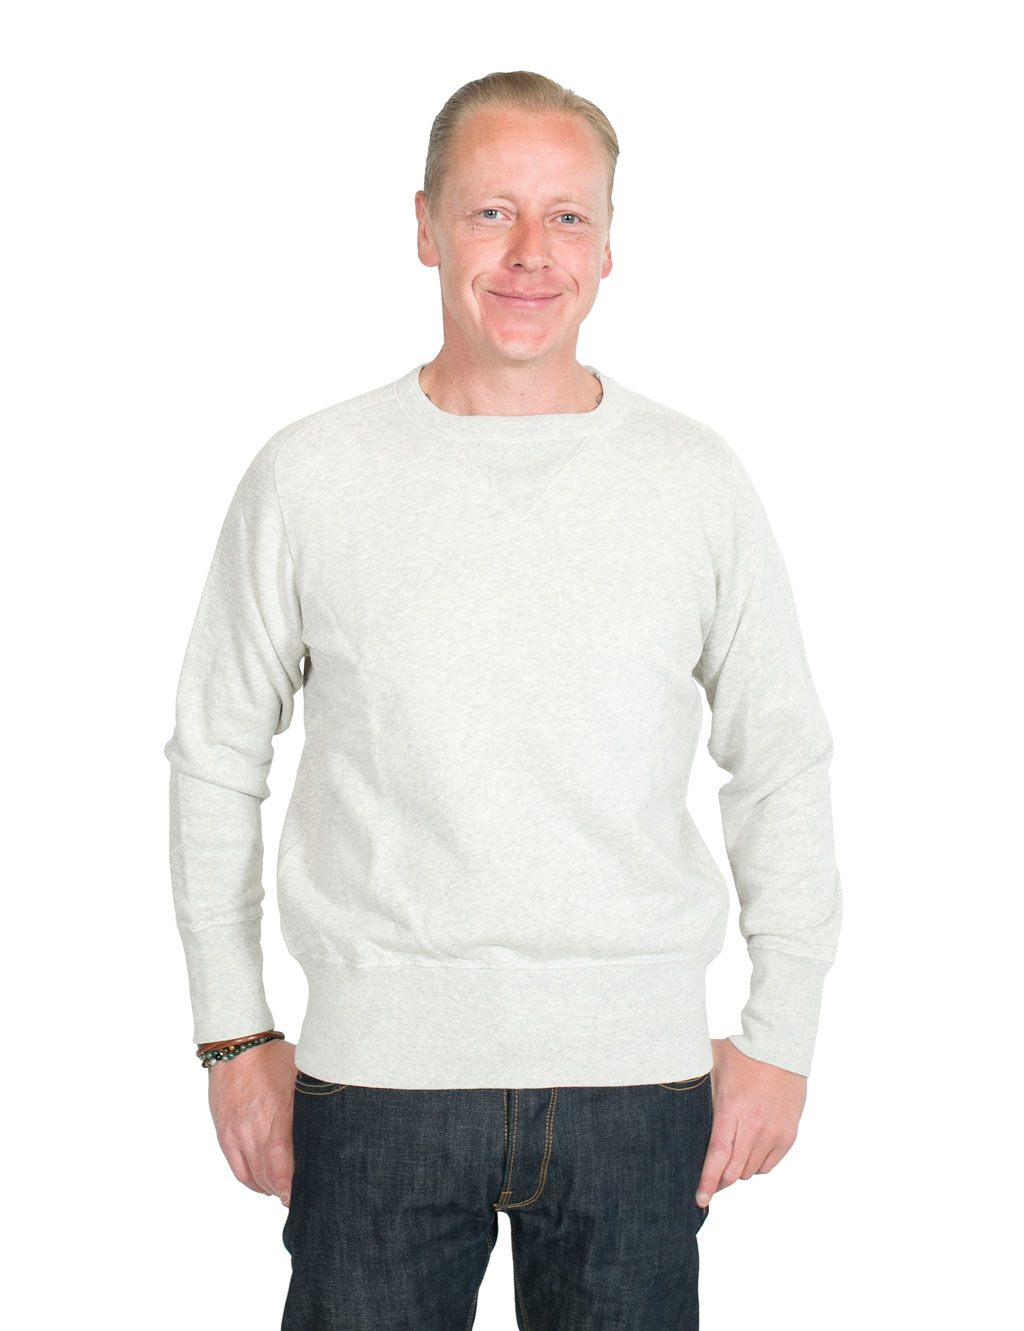 Levis Vintage Clothing - Bay Meadows Crew Sweatshirt - Oatmeal